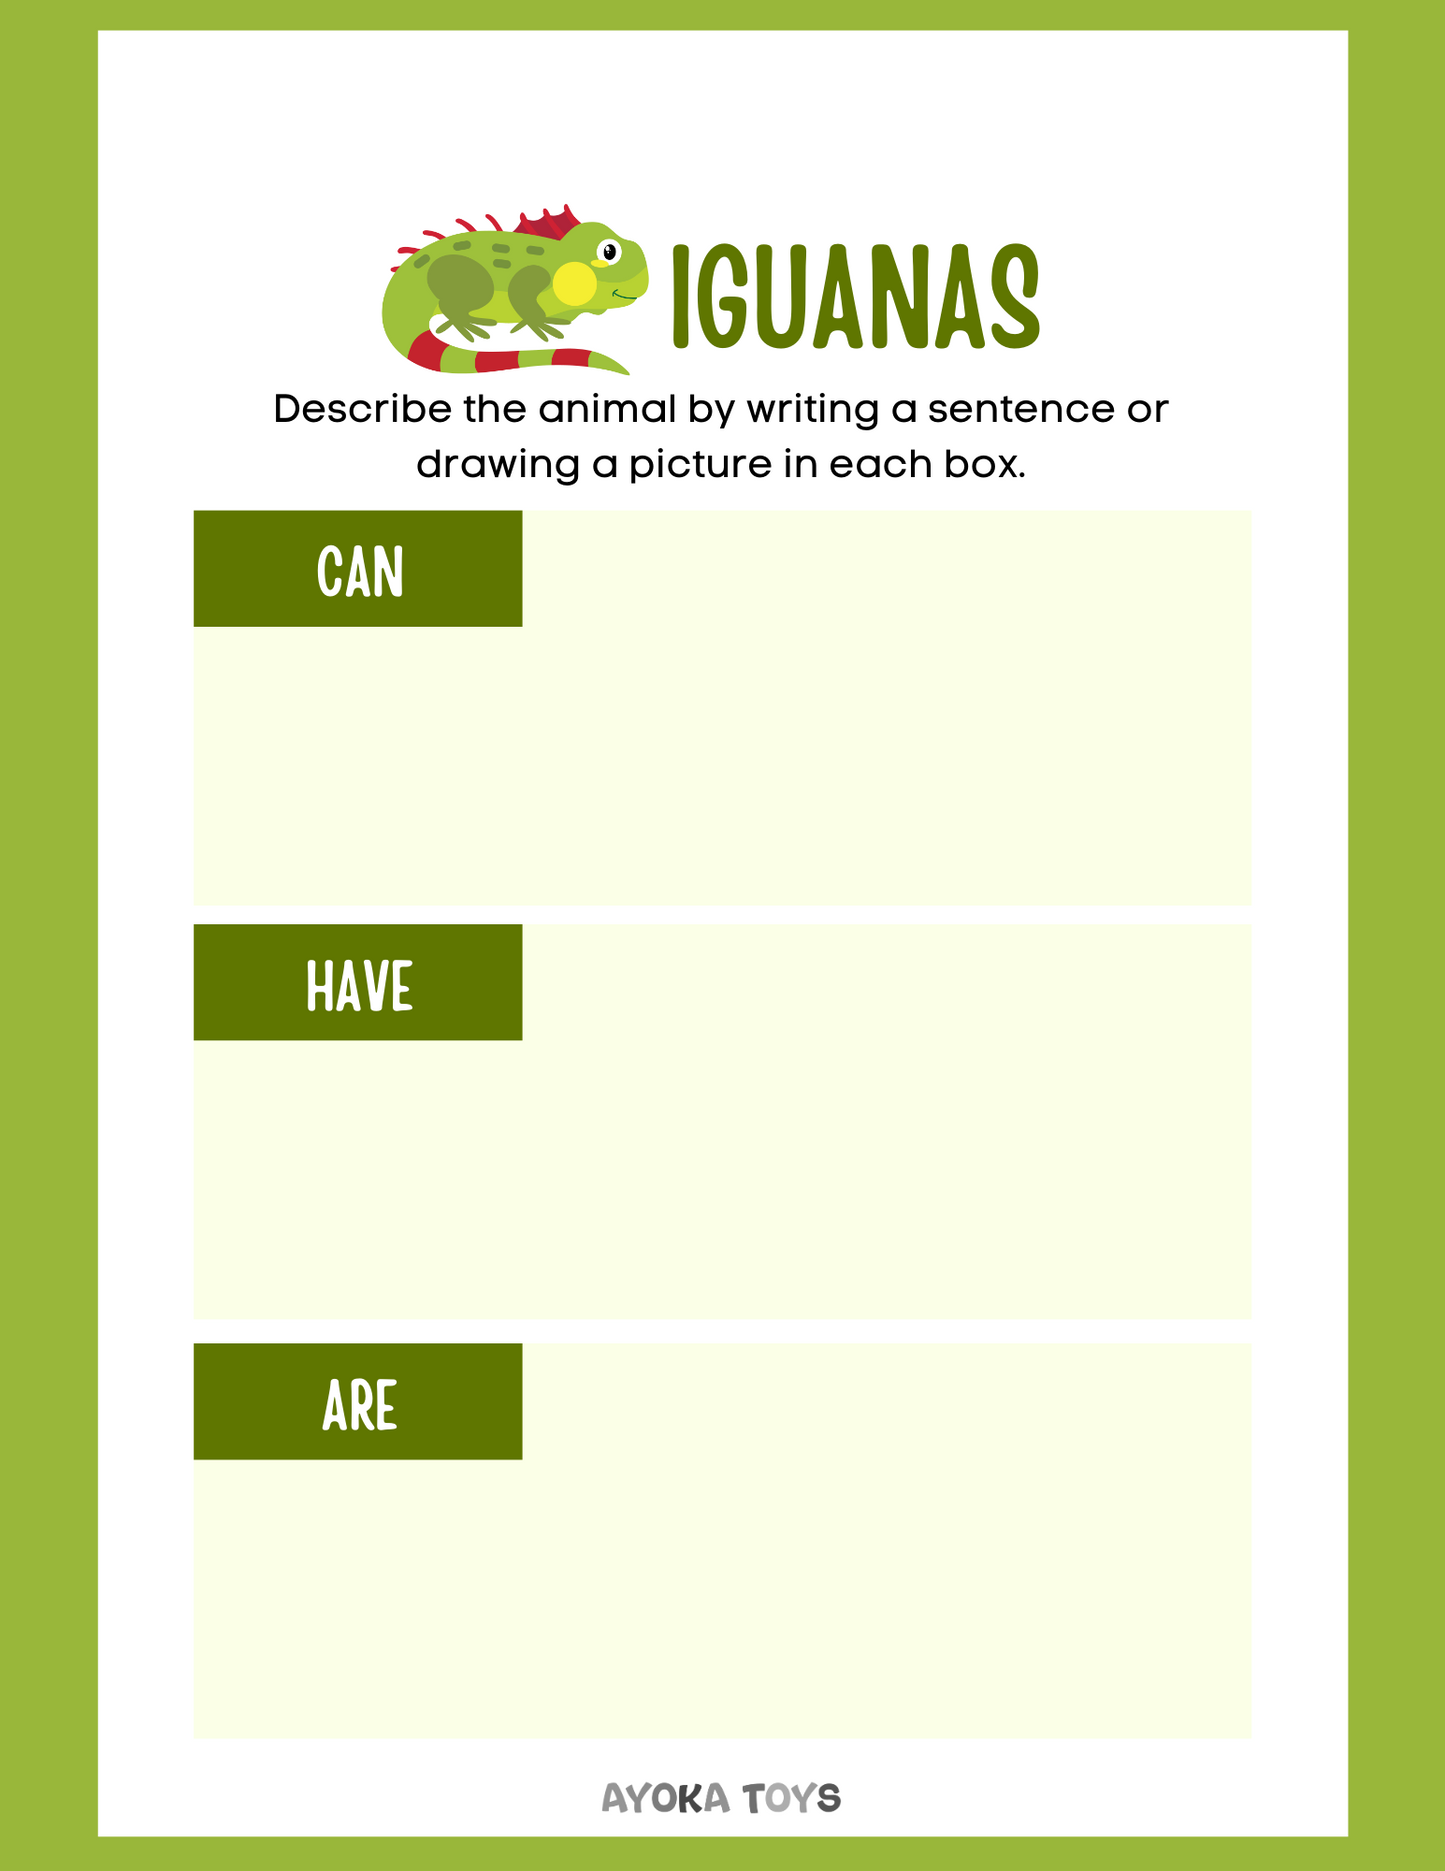 Animal Research - Iguanas